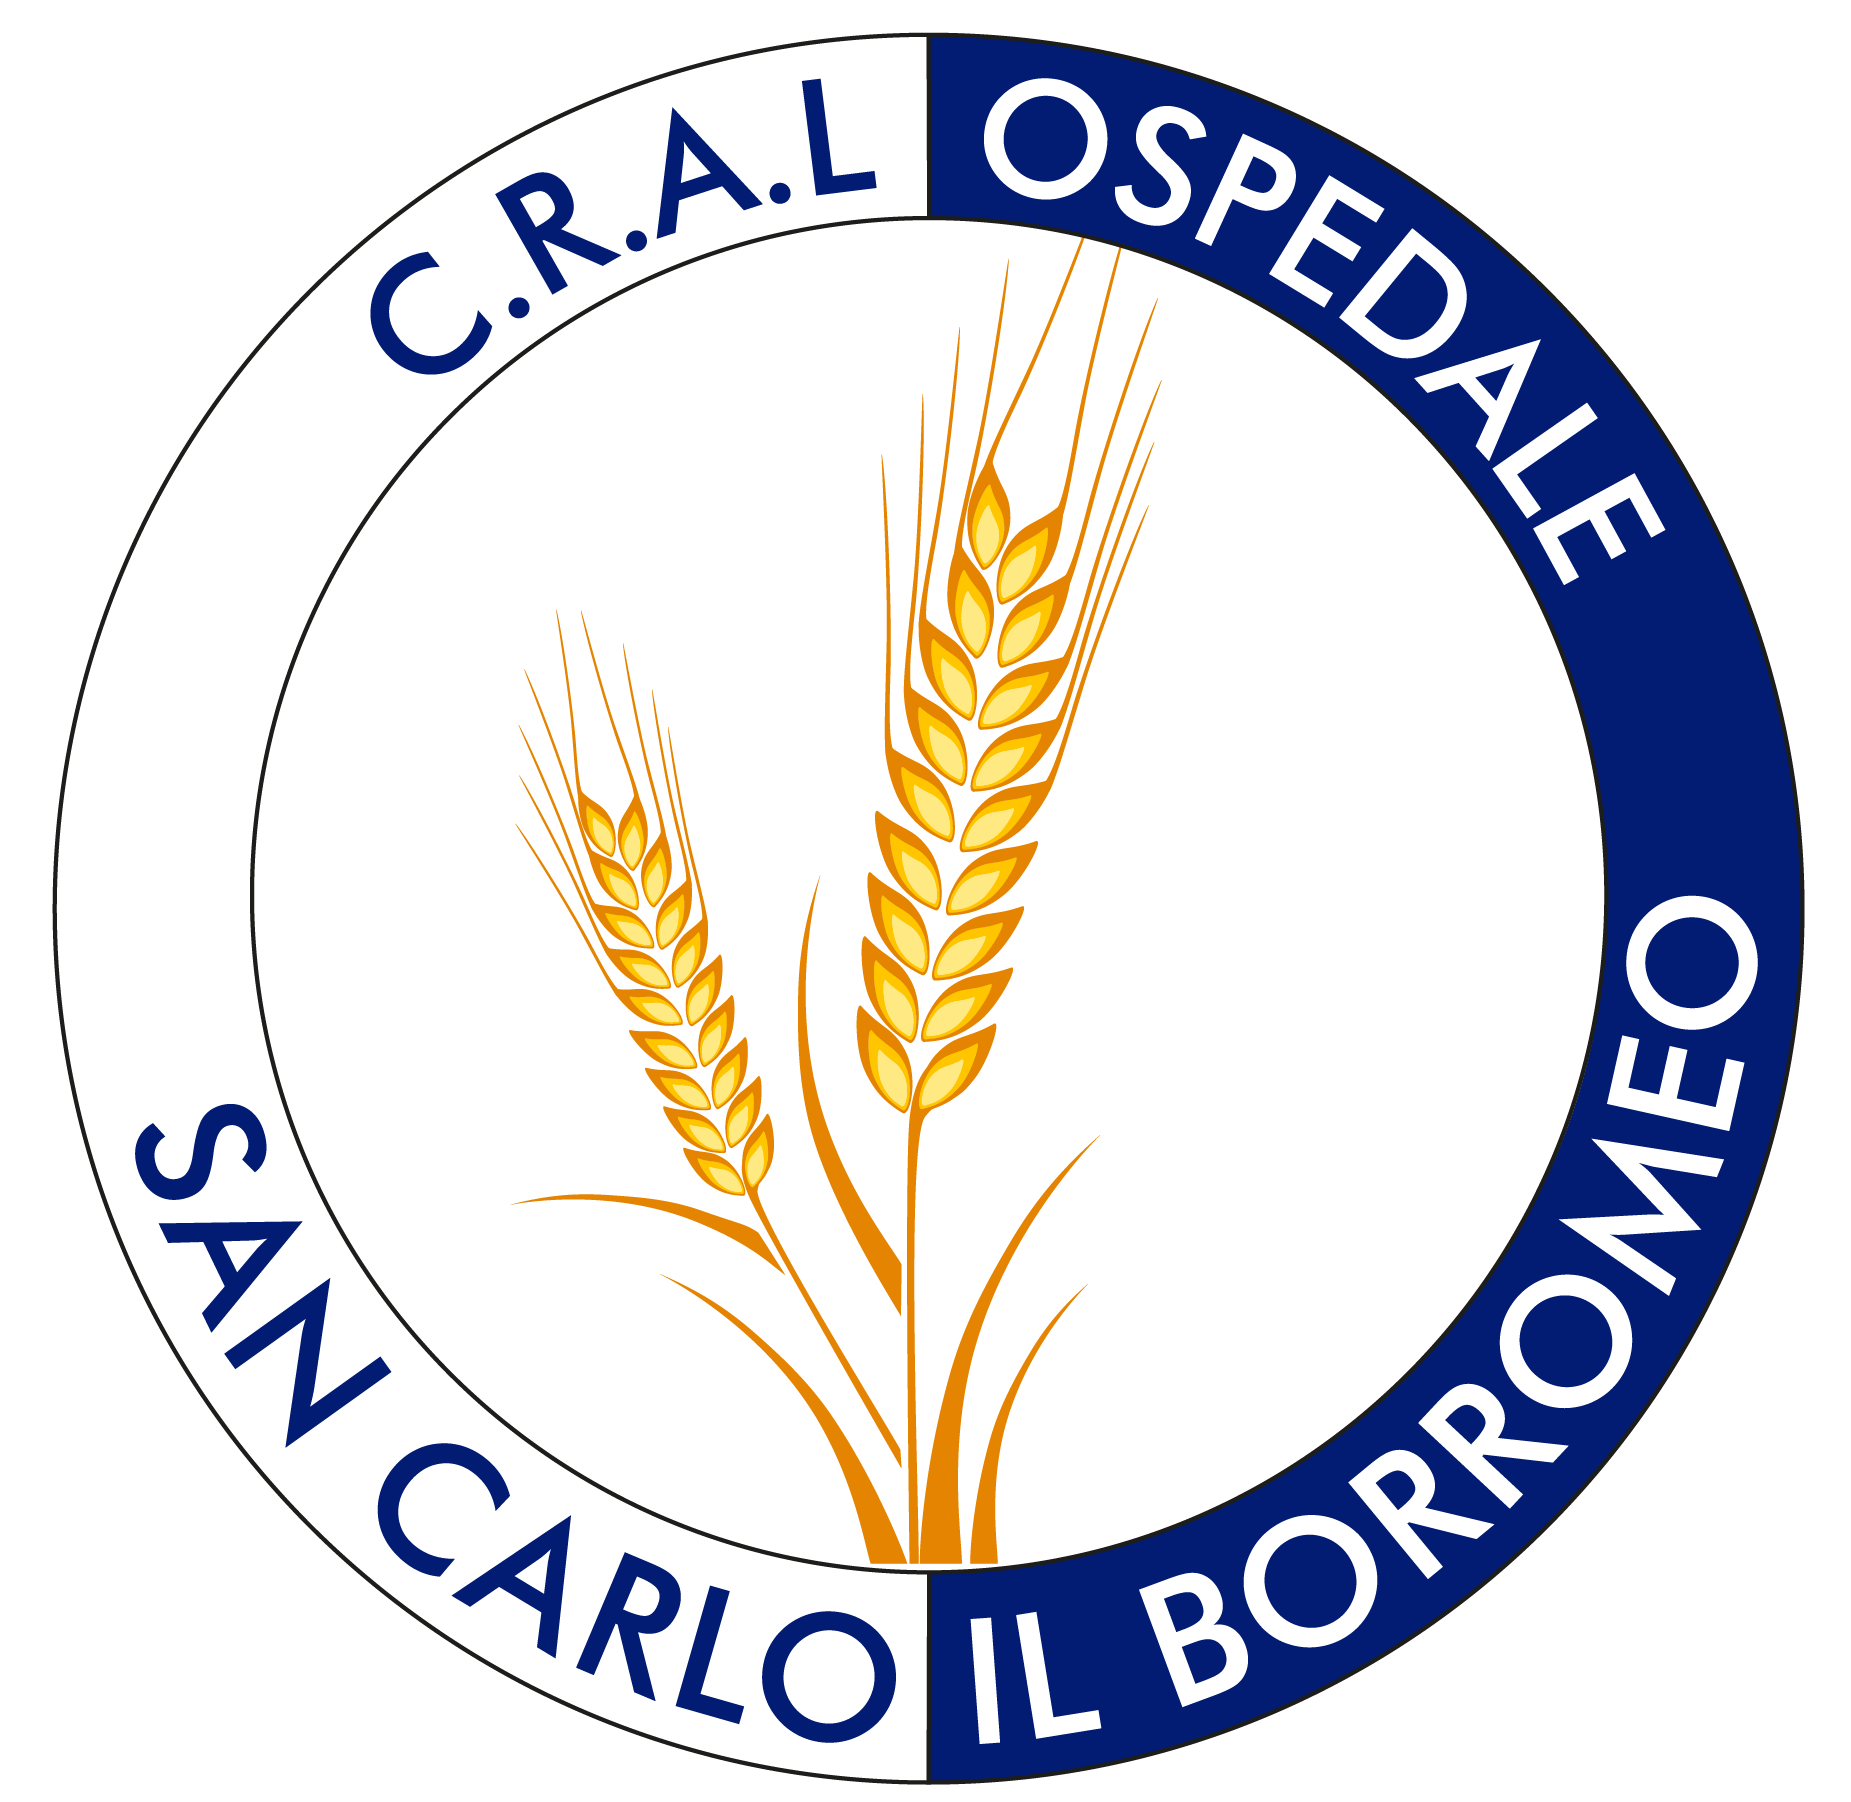 Cral San Carlo Borromeo